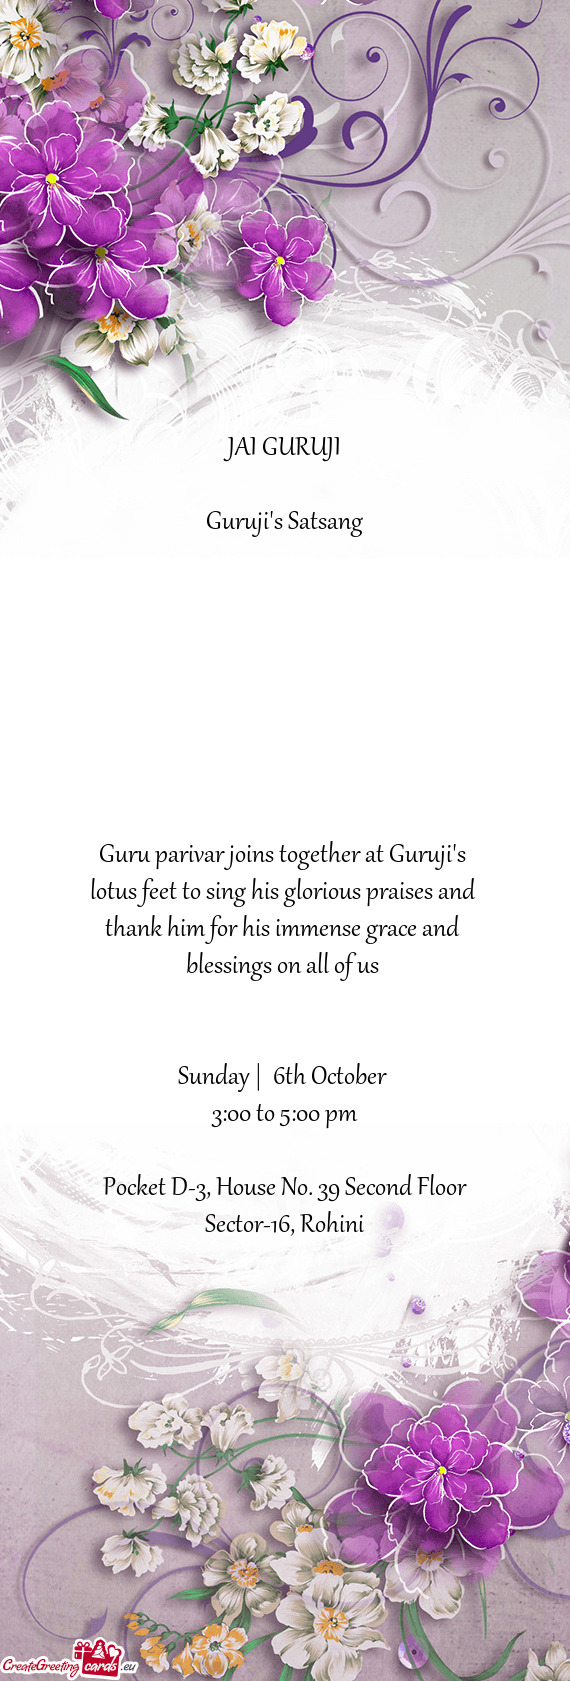 Guru parivar joins together at Guruji